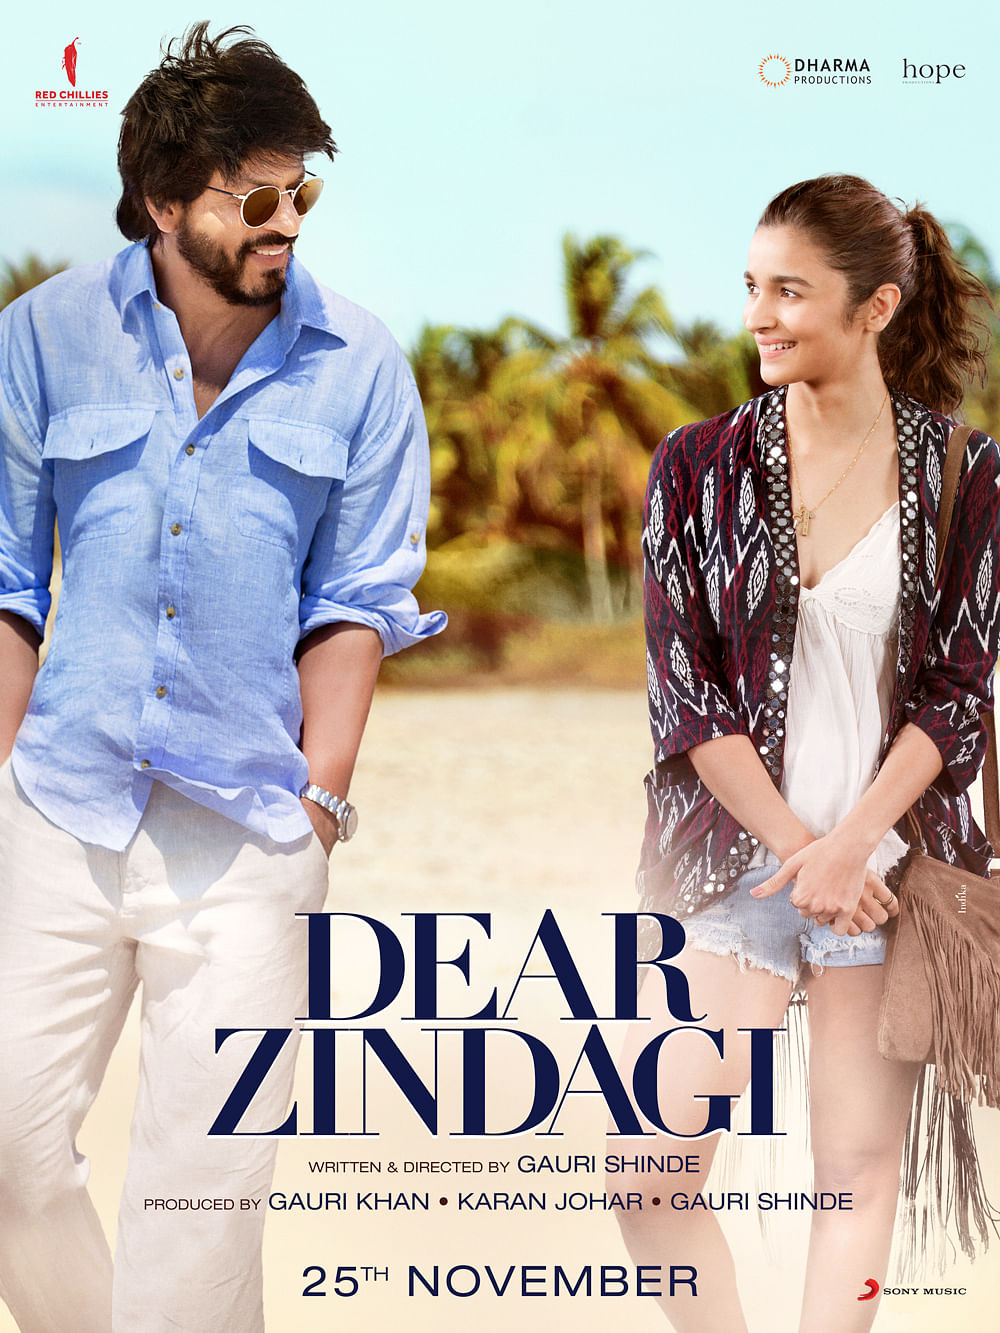 Shah Rukh Khan’s teaching Alia Bhatt how to crack better jokes in the ‘Dear Zindagi’ teaser and it’s adorably funny.